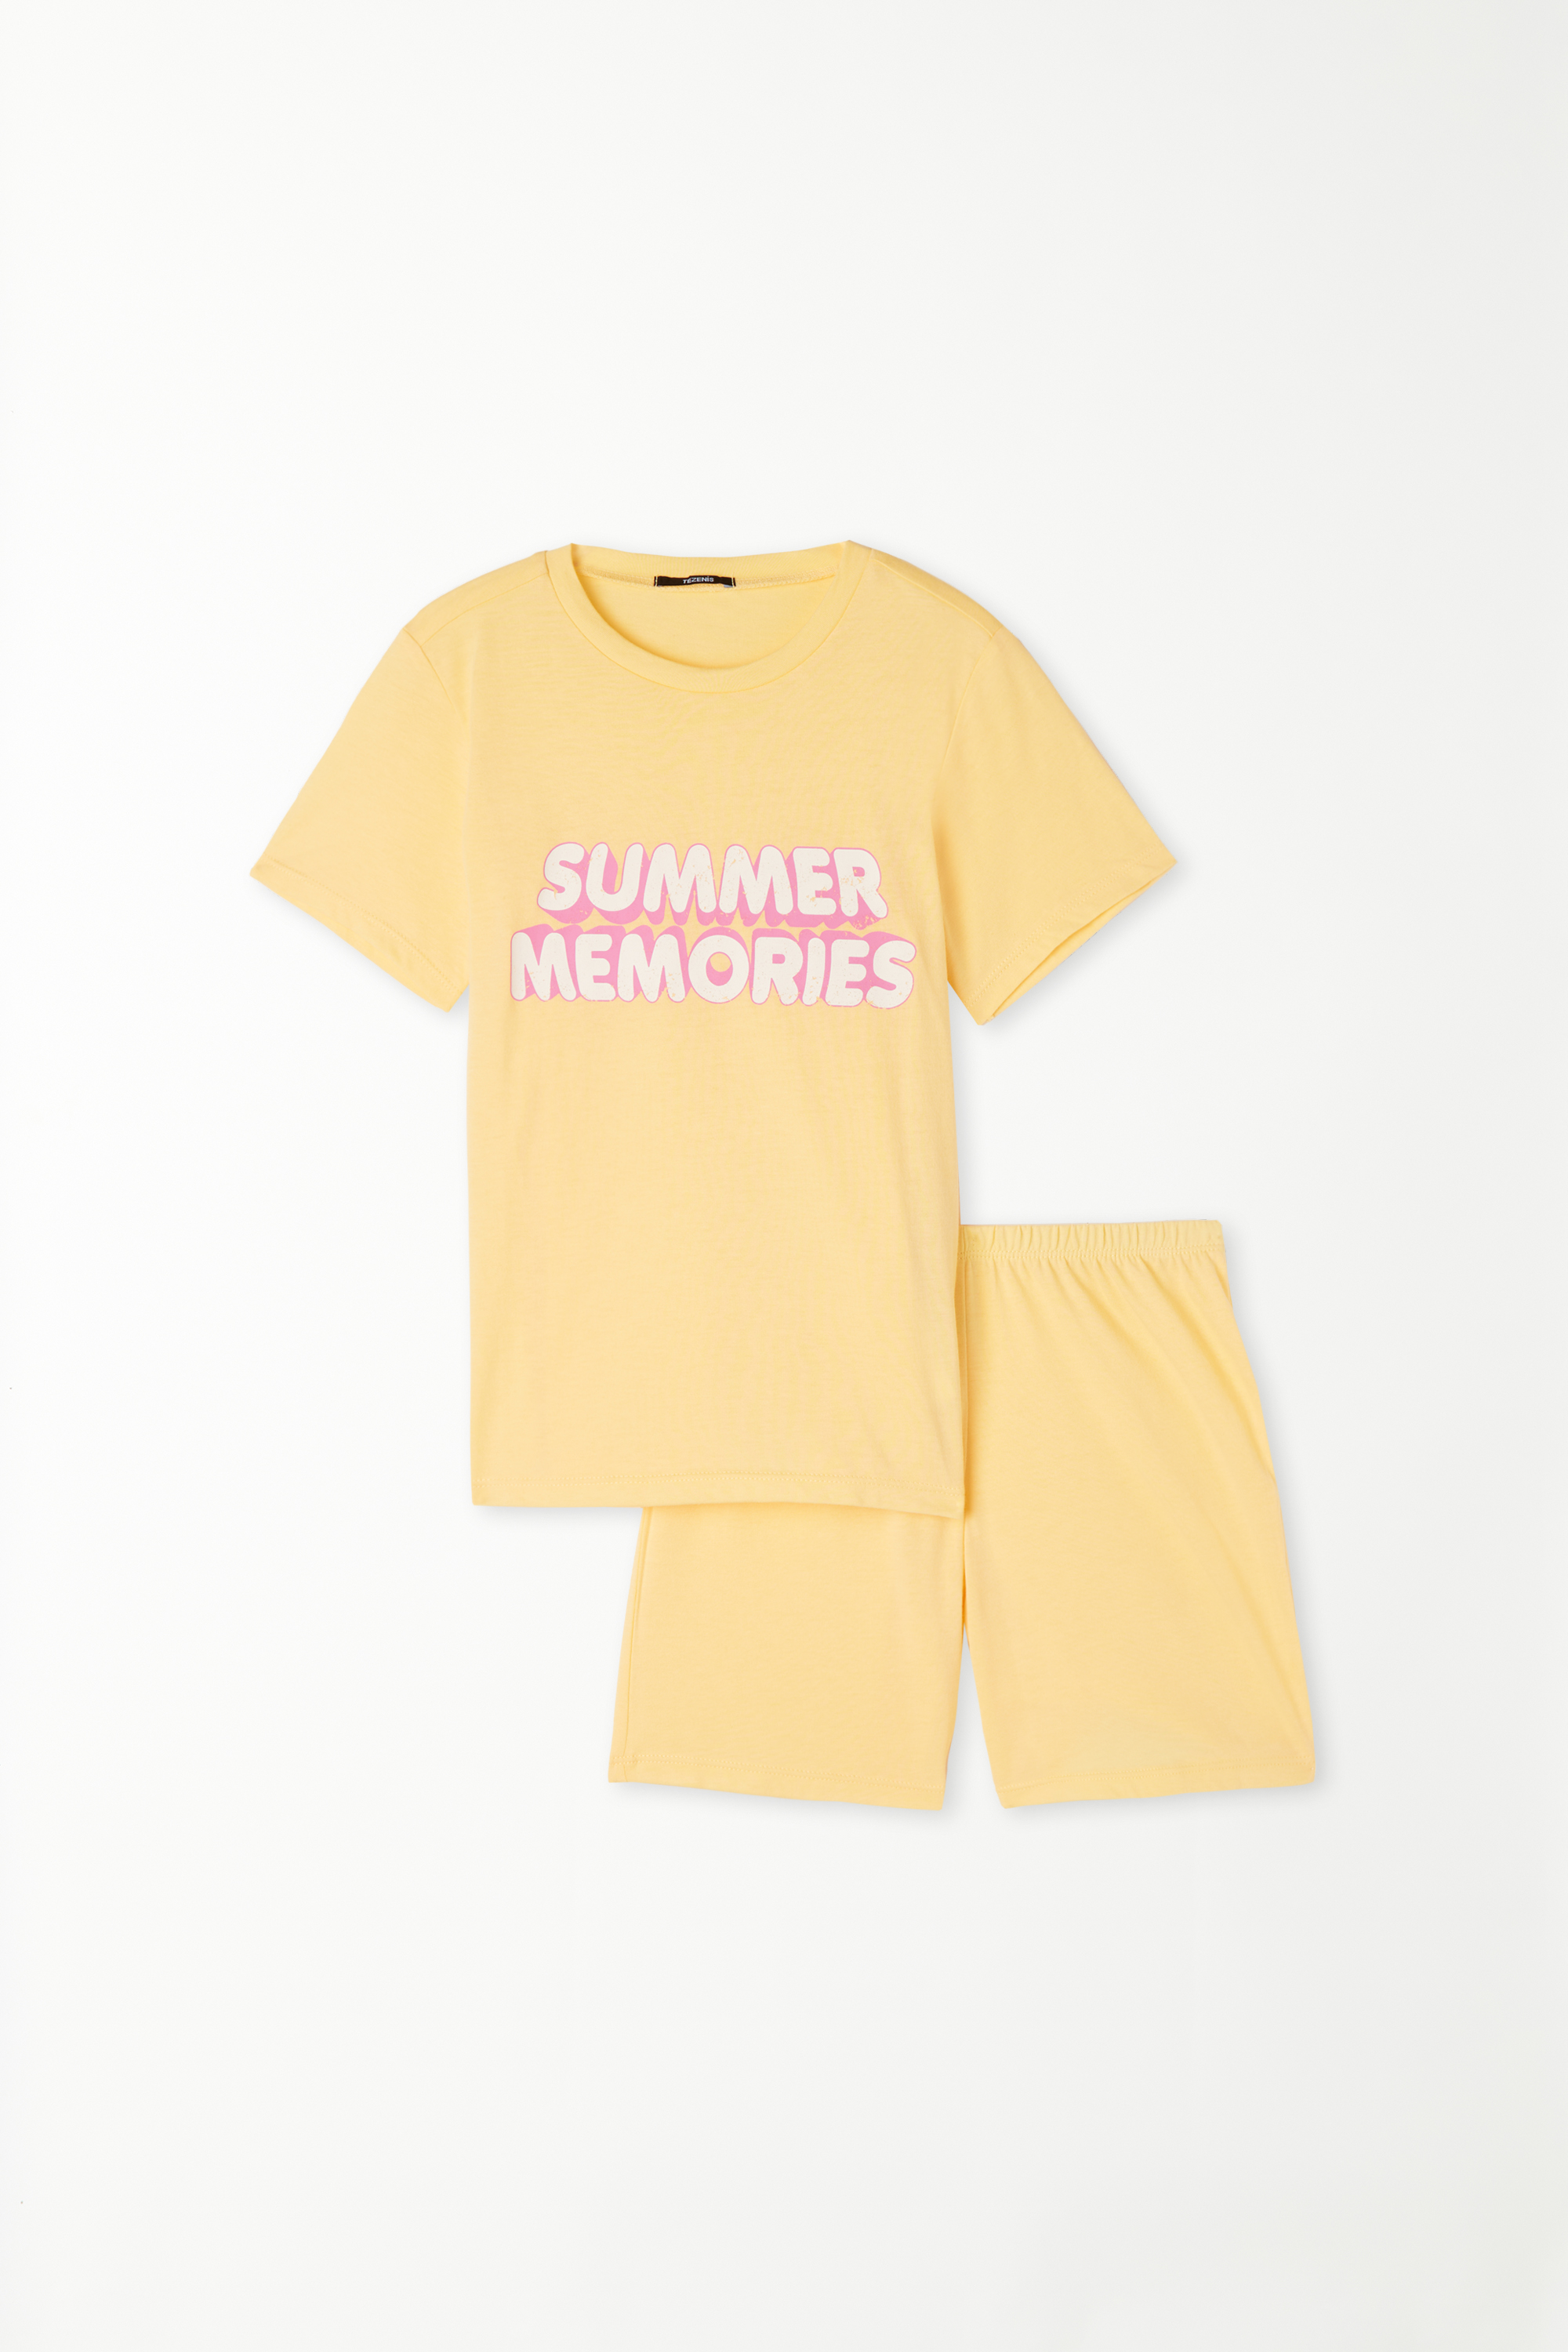 Girls’ Printed Cotton T-Shirt and Shorts Set